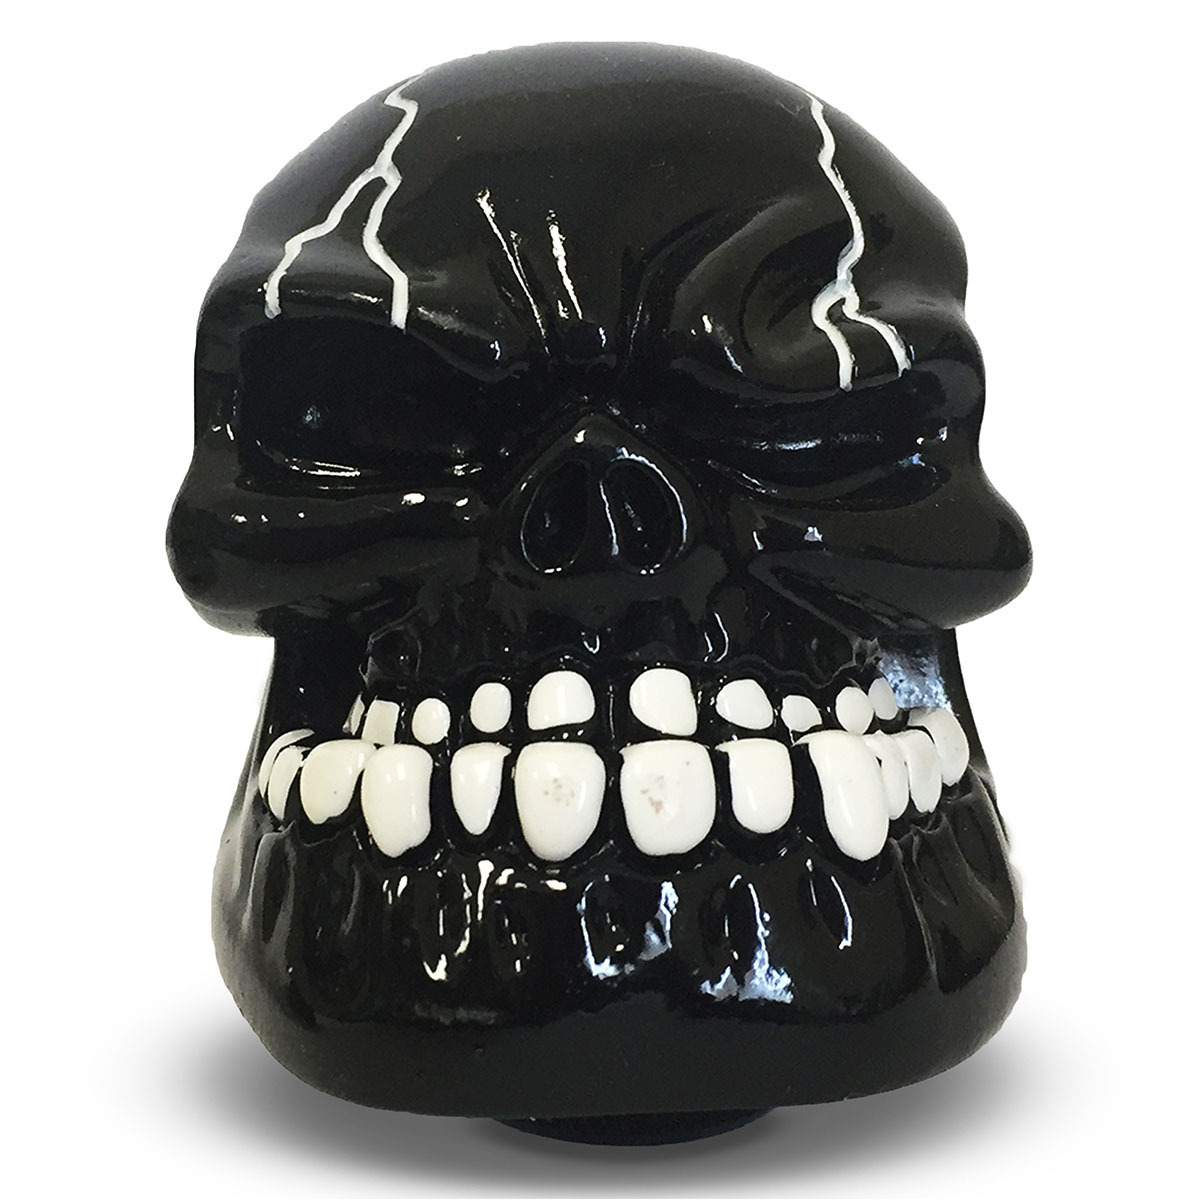 Skull Gear Knob Black Large